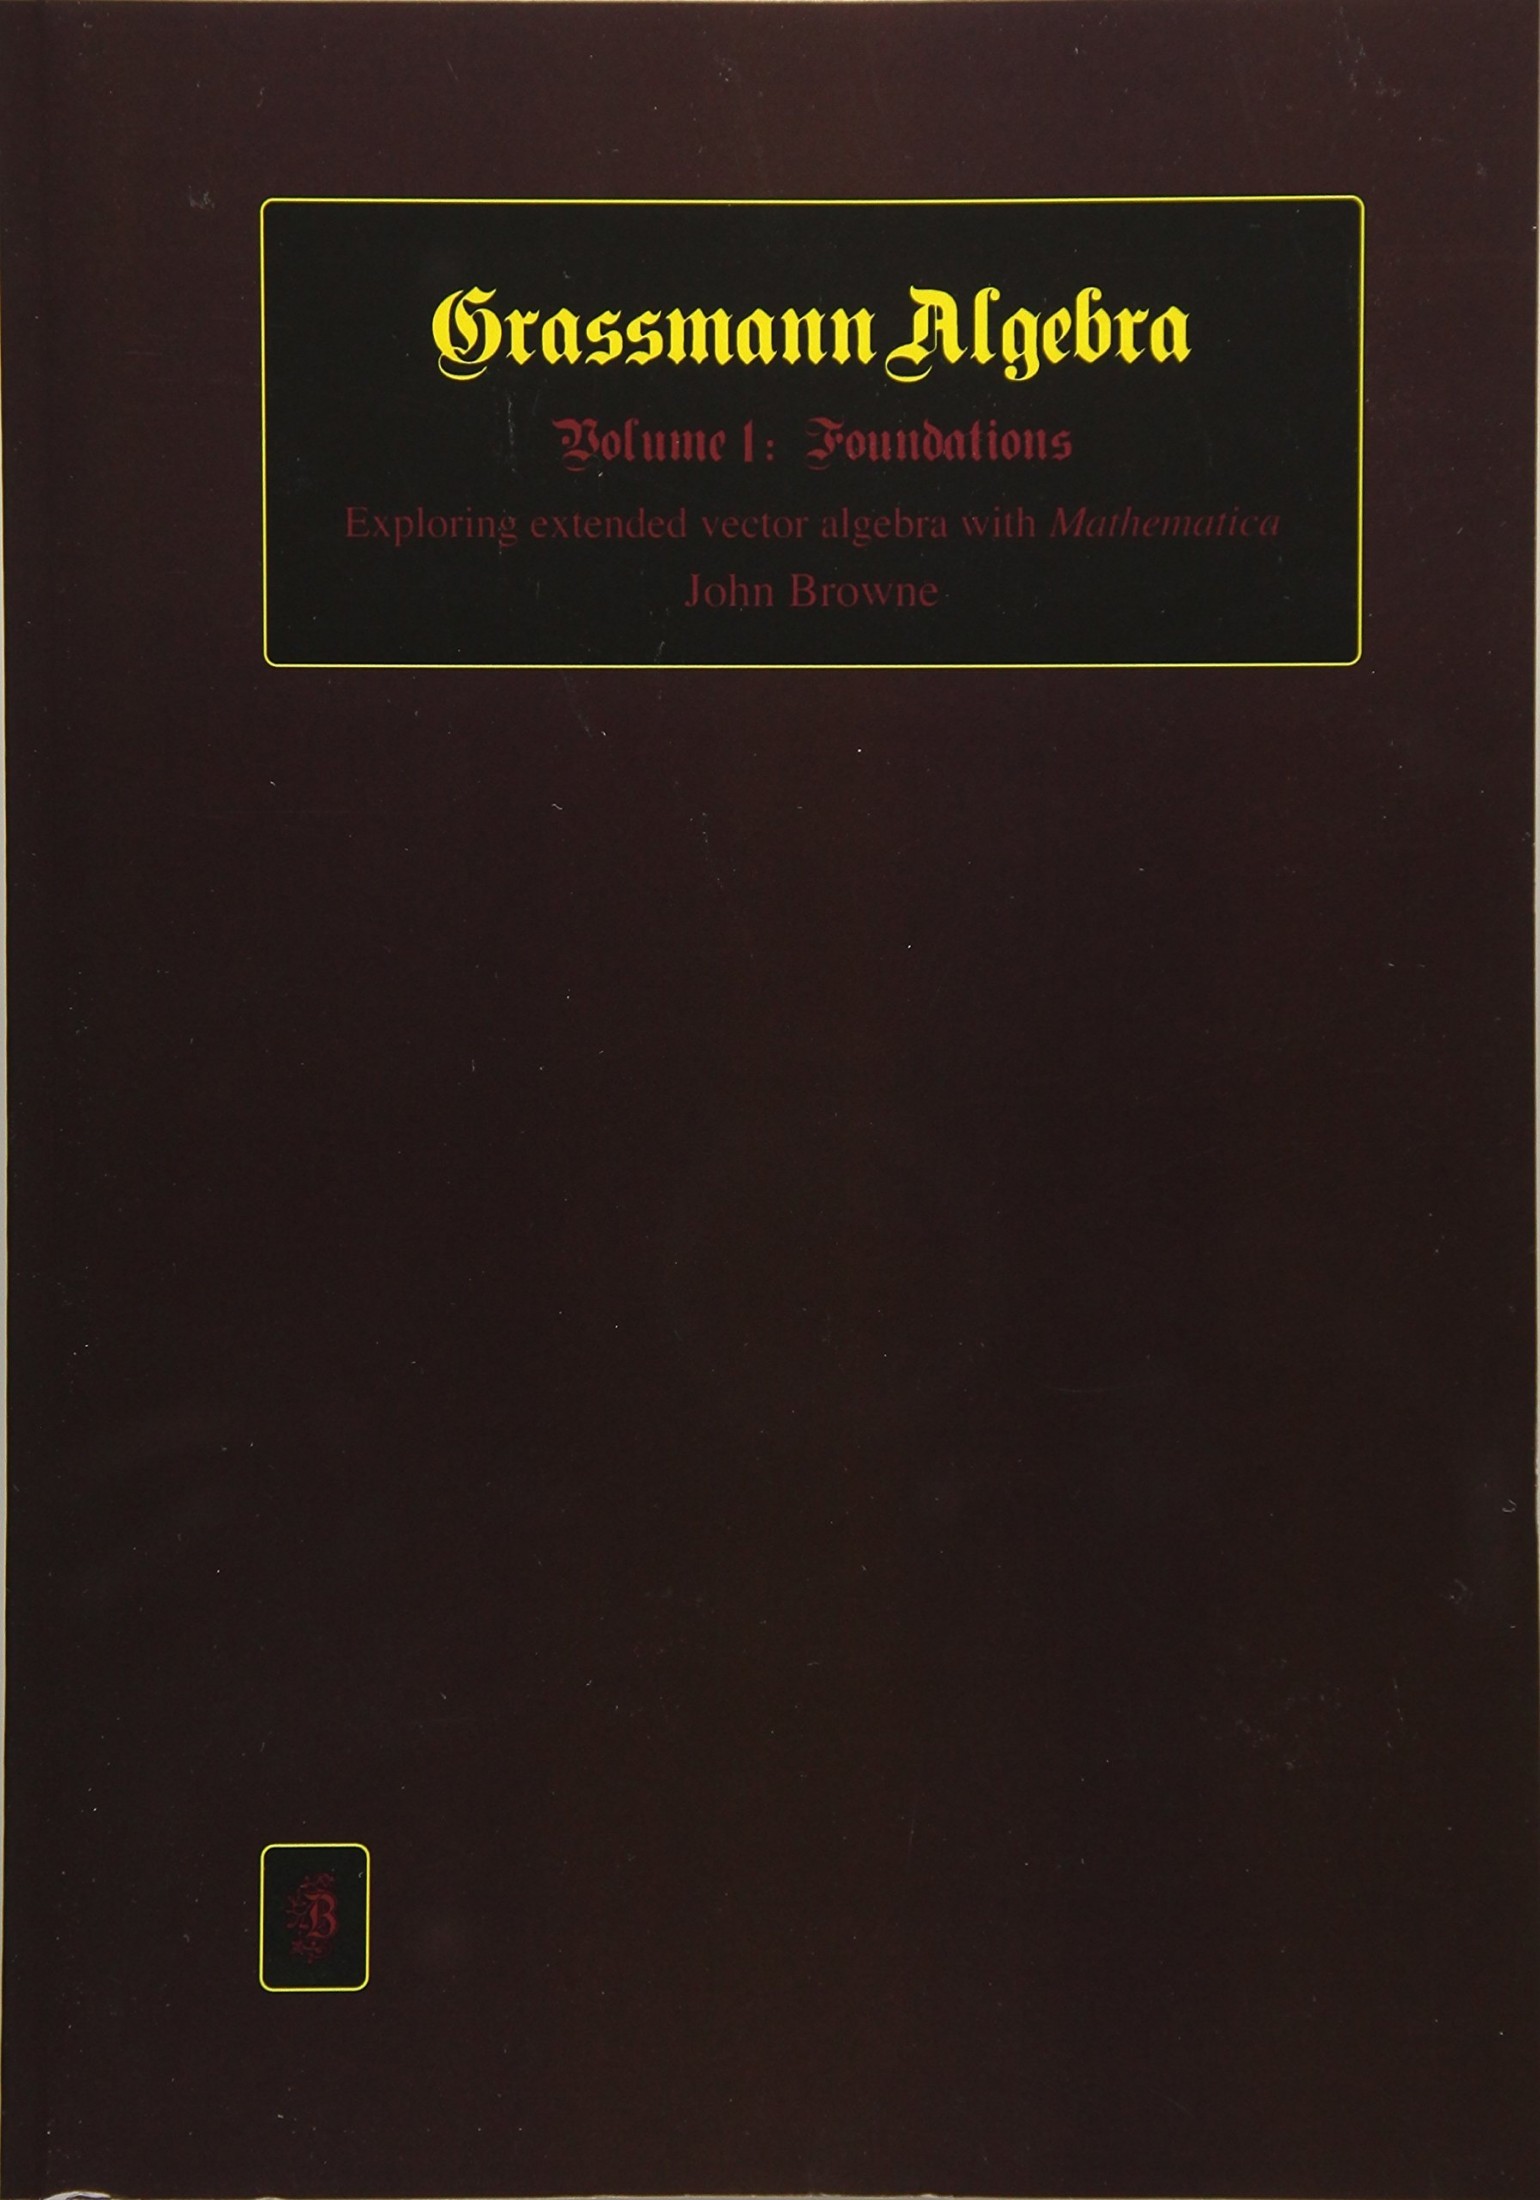 Grassmann Algebra Volume 1: Foundations: Exploring Extended Vector Algebra with Mathematica®